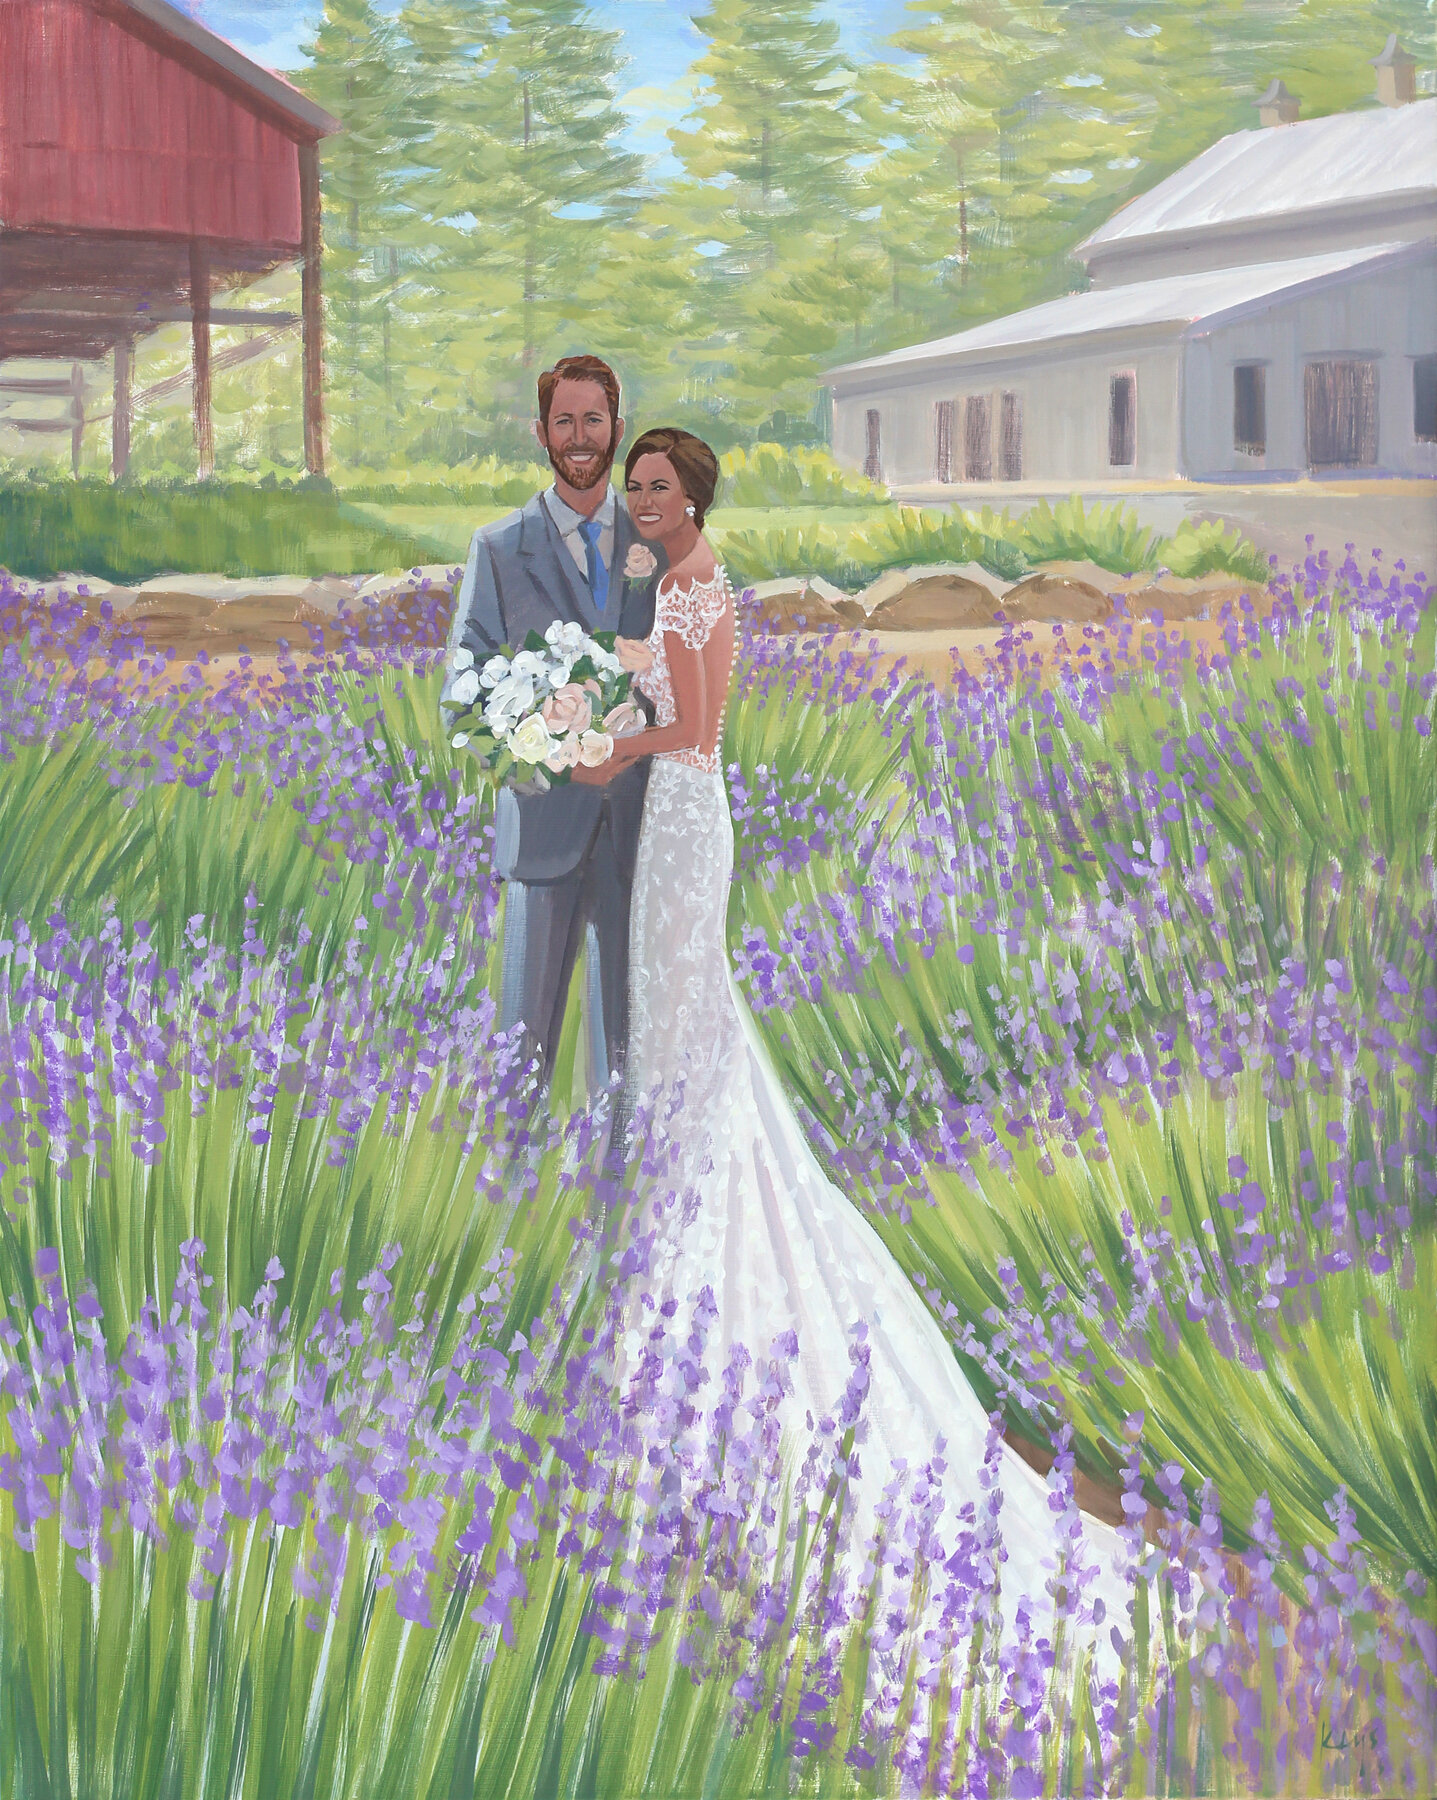 Chapel Hill Live Wedding Painter, Ben Keys, captured Kim + Matt’s first look at Lavender Oaks Farm.